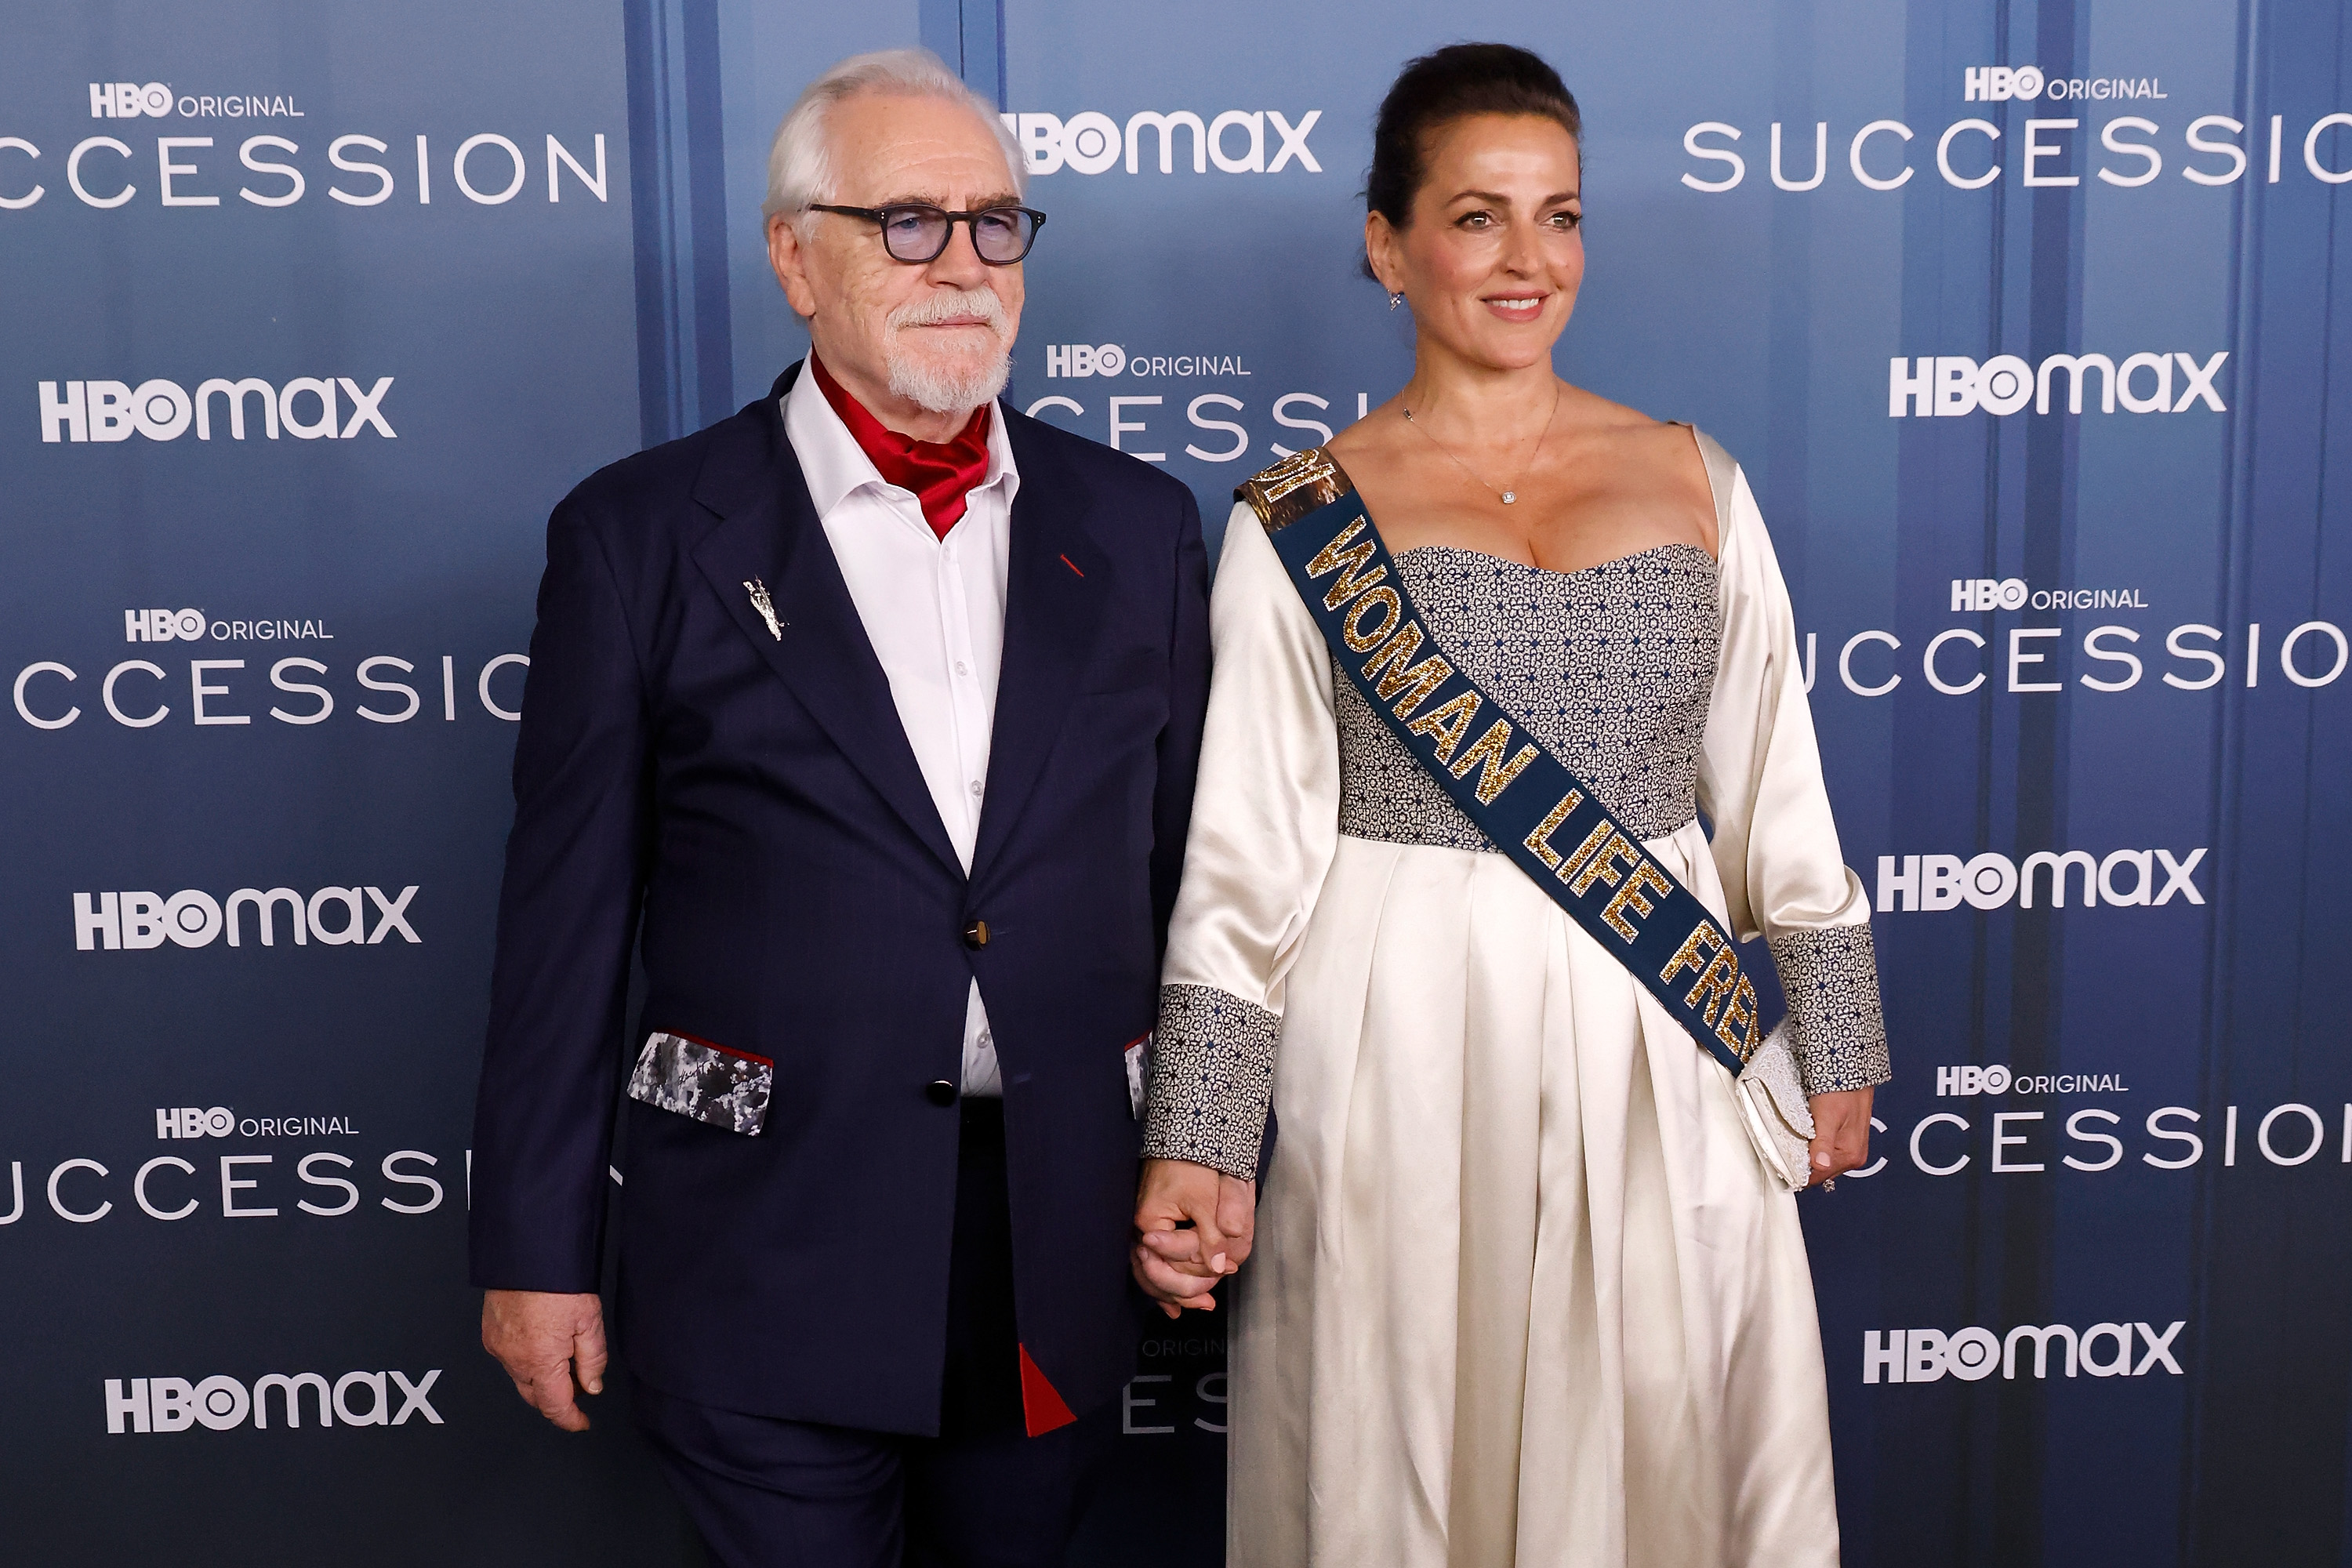 Brian Cox and Nicole Ansari-Cox attend the Season 4 premiere of HBO's "Succession" (Photo by Taylor Hill/FilmMagic)